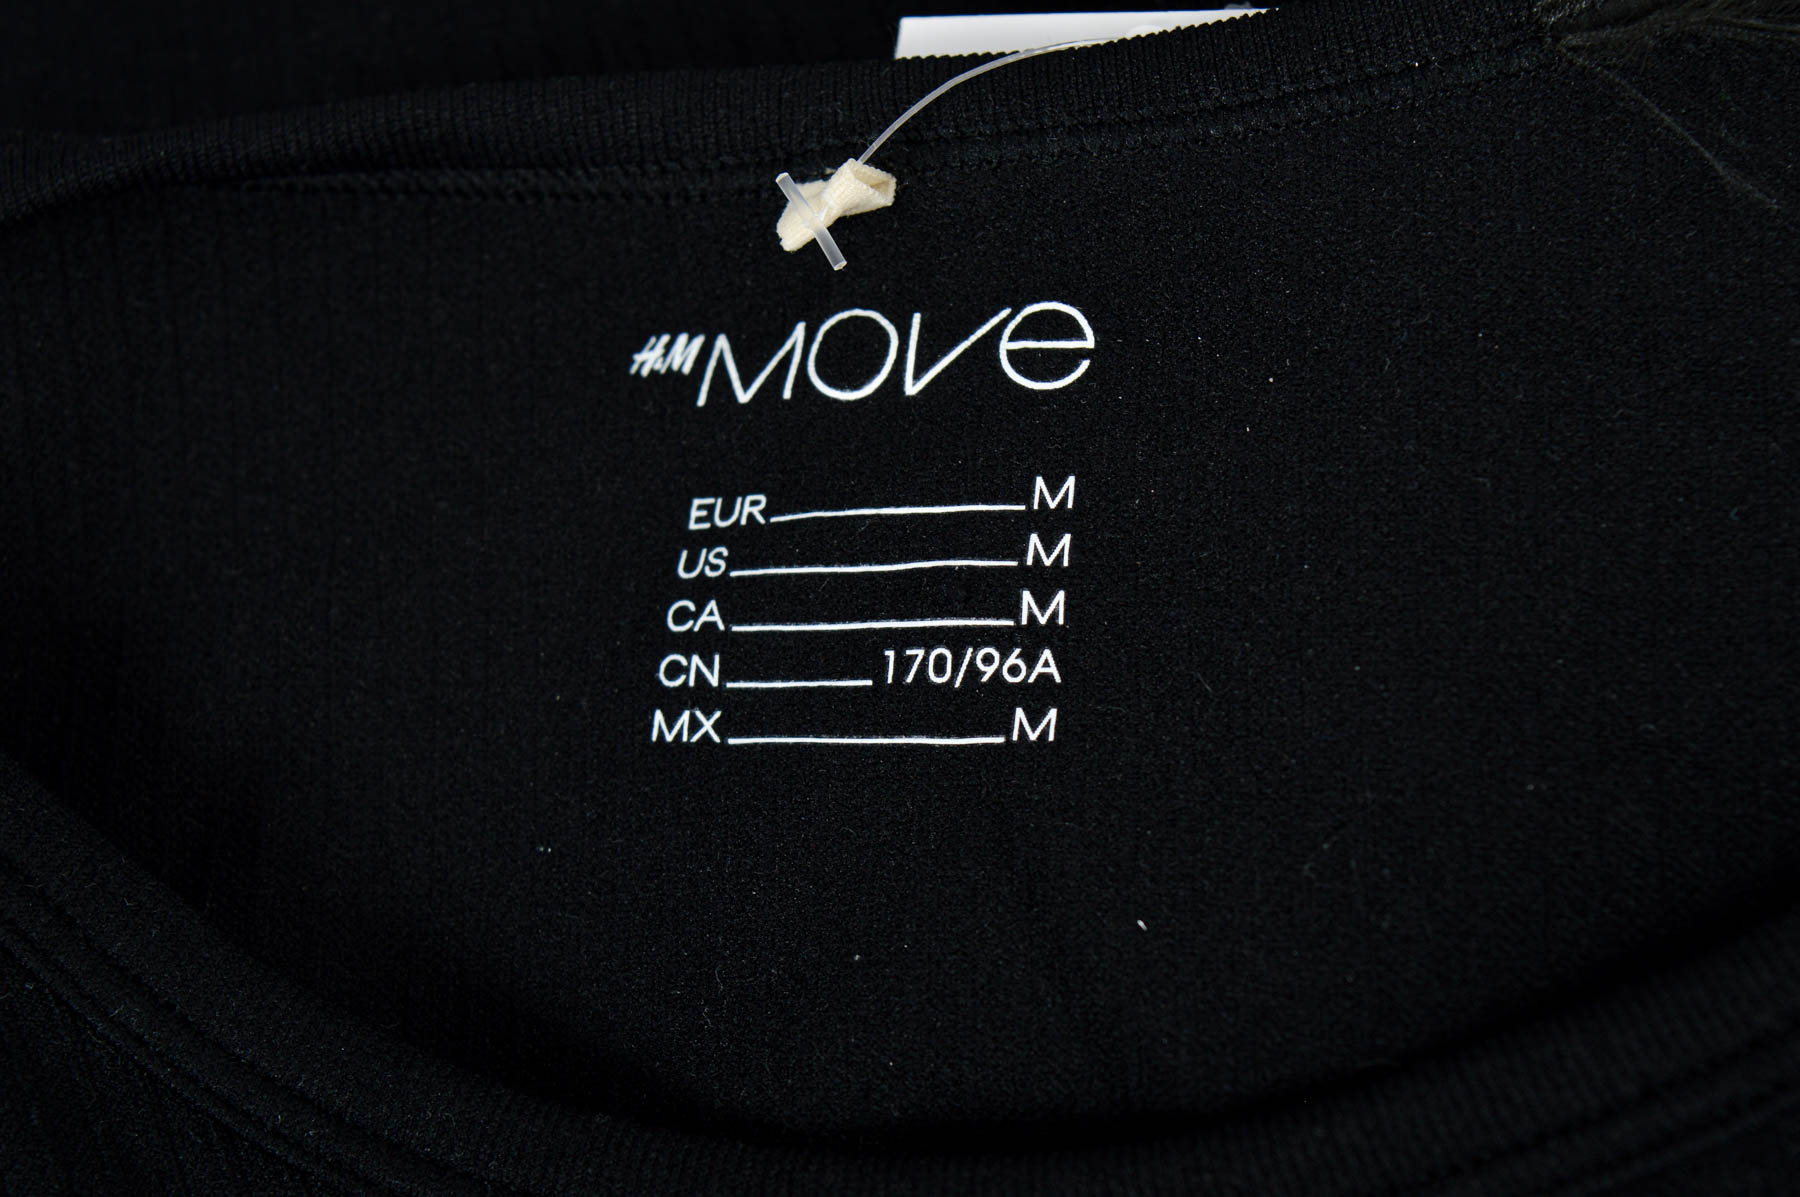 Bluza de damă - H&M MOVE - 2